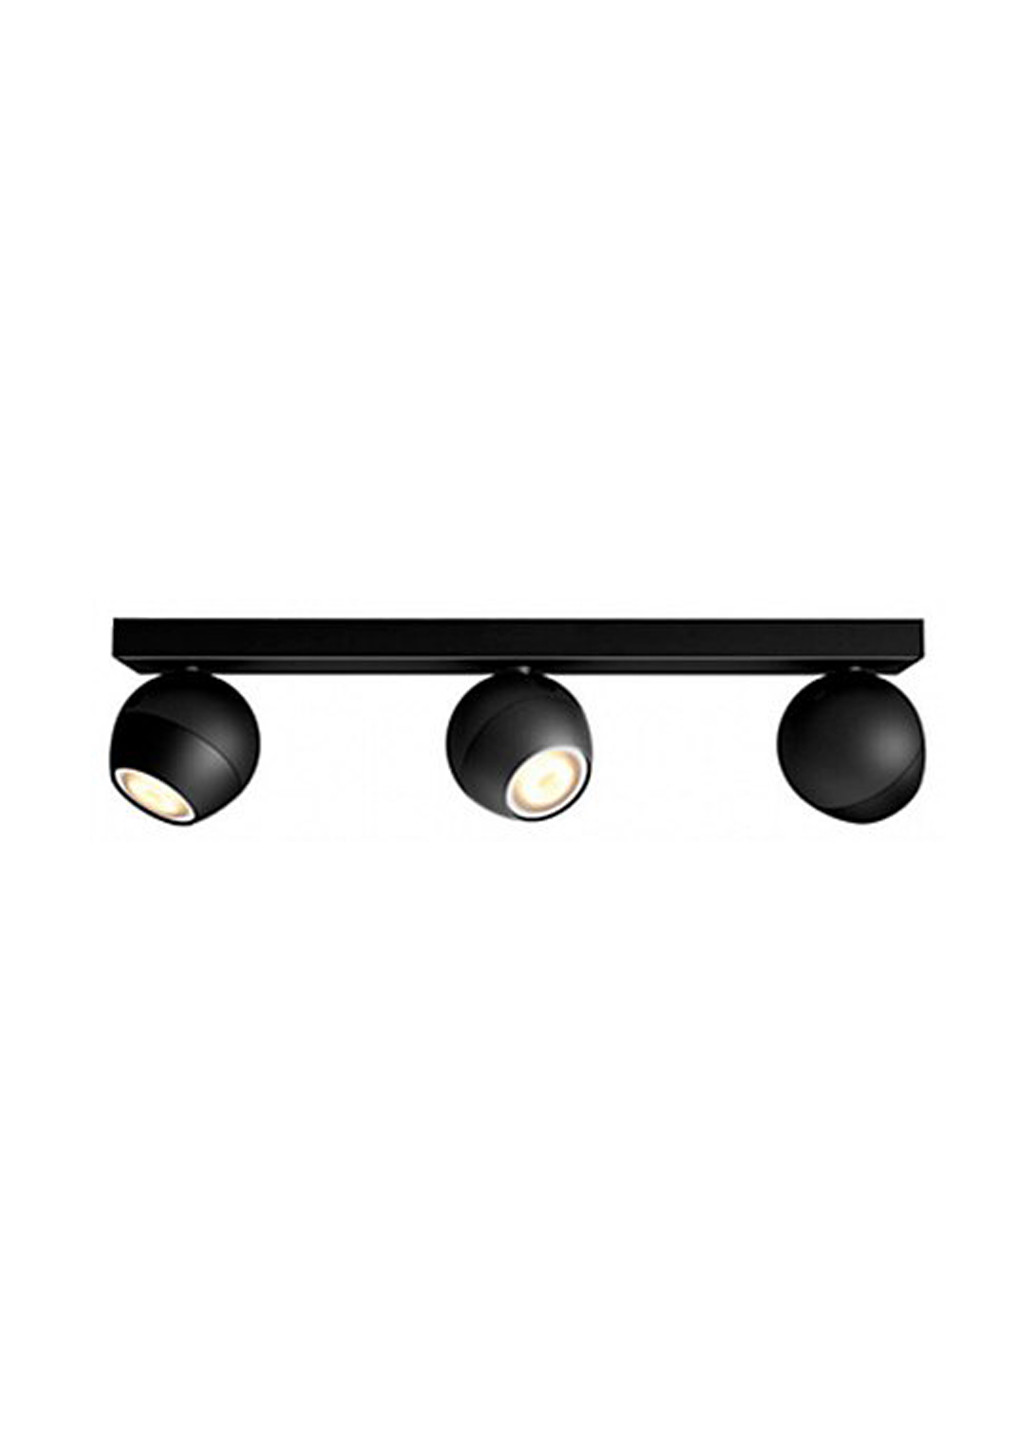 Смарт-светильник BUCKRAM bar/tube black 3x5.5W 240V (50473/30/P7) Philips смарт buckram bar/tube black 3x5.5w 240v (50473/30/p7) (142289703)